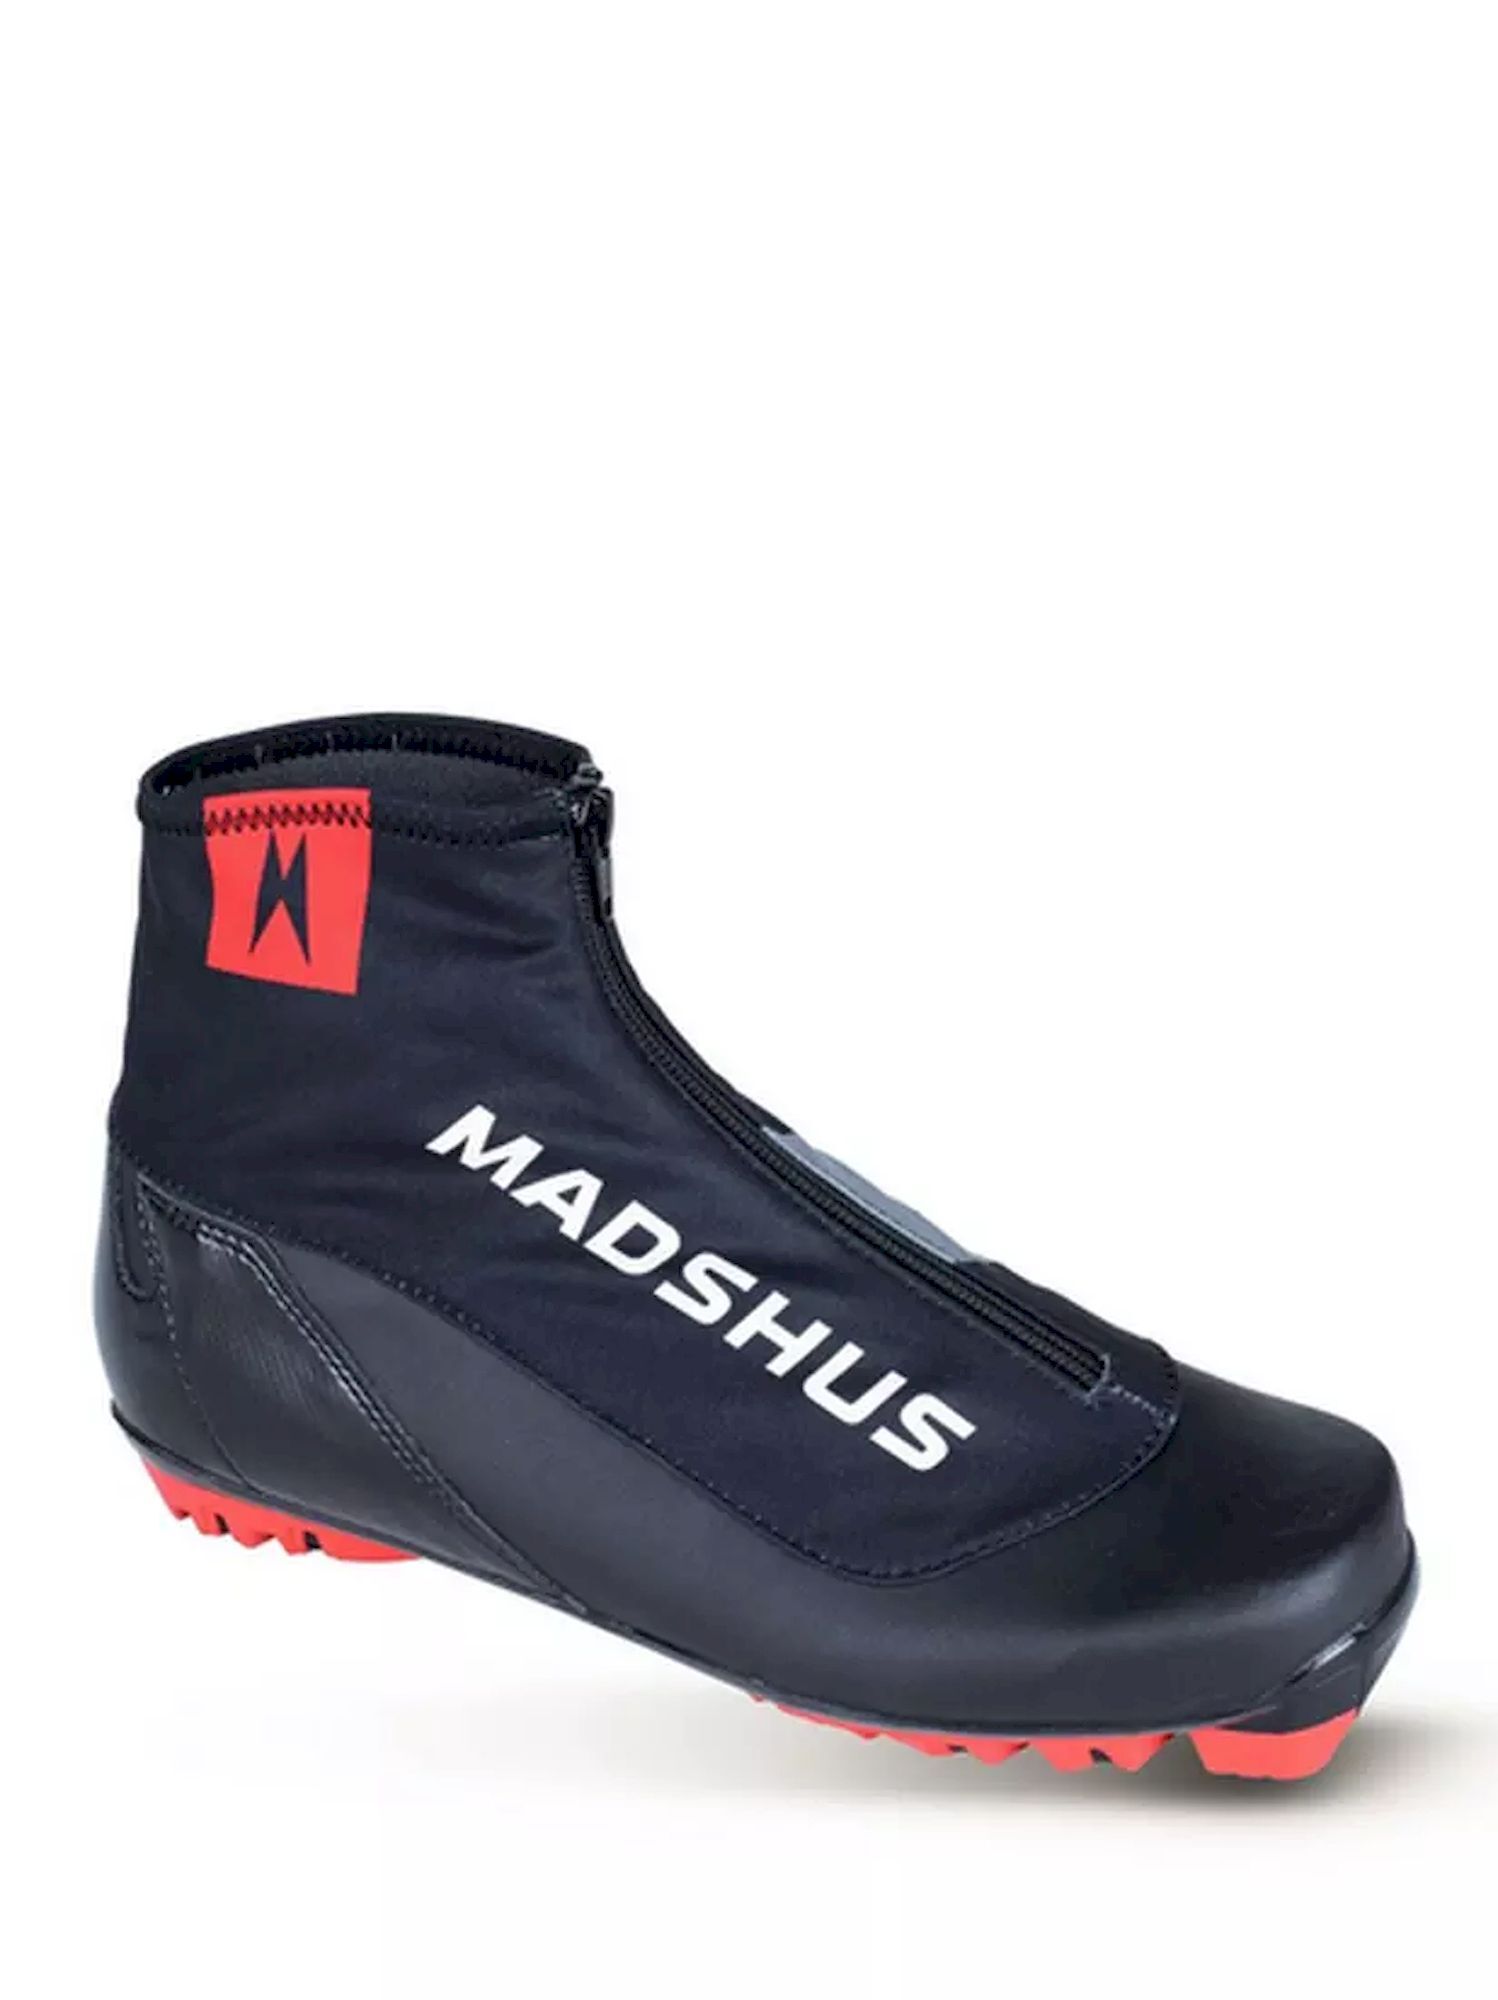 Madshus Endurace Classic - Langrendsstøvler | Hardloop